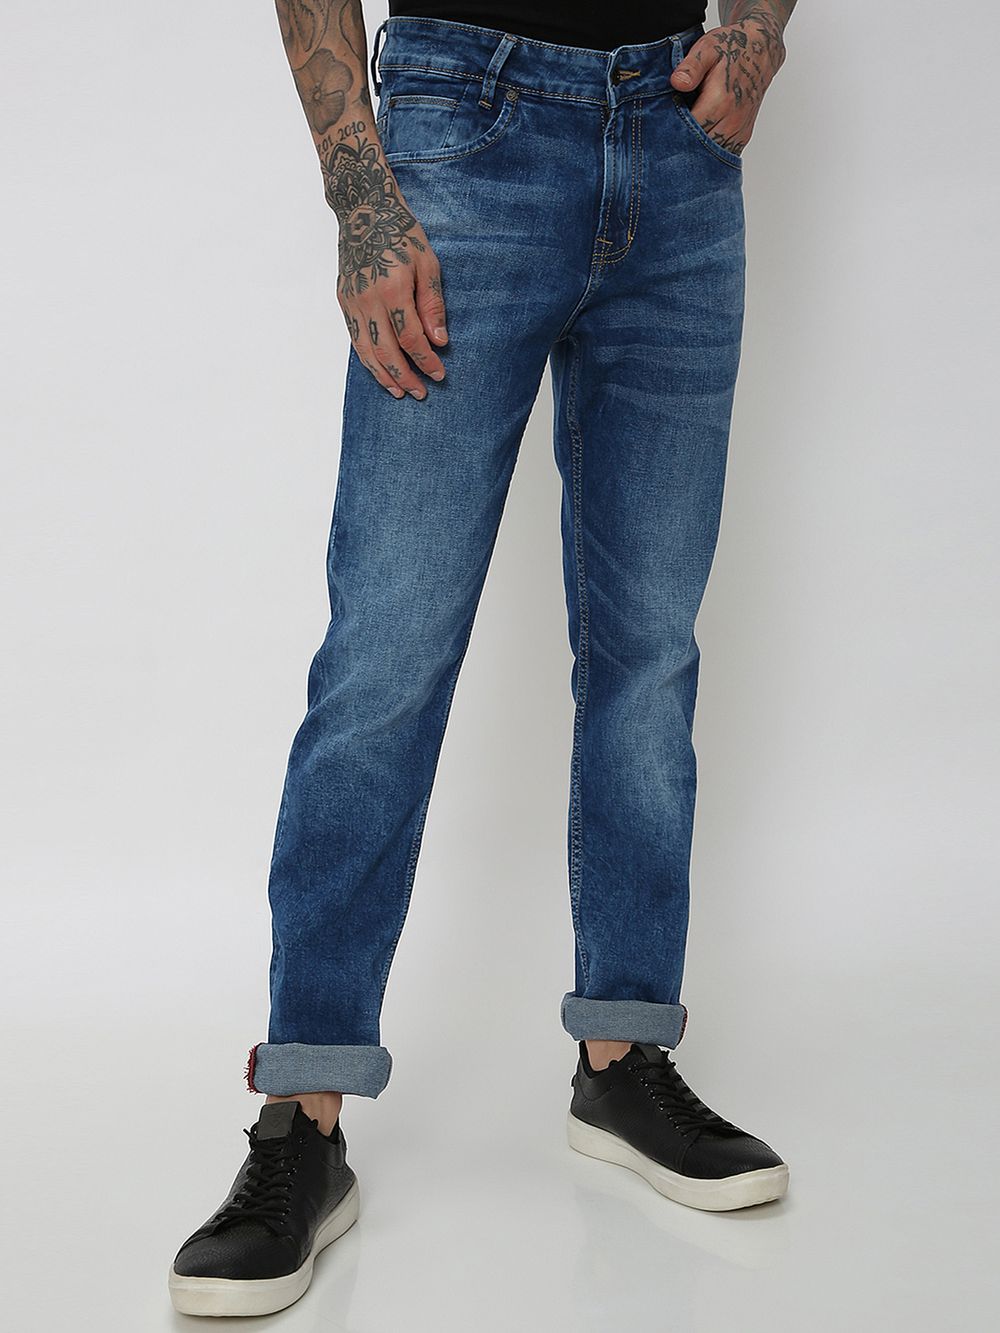 Blue Black Skinny Fit Originals Stretch Jeans